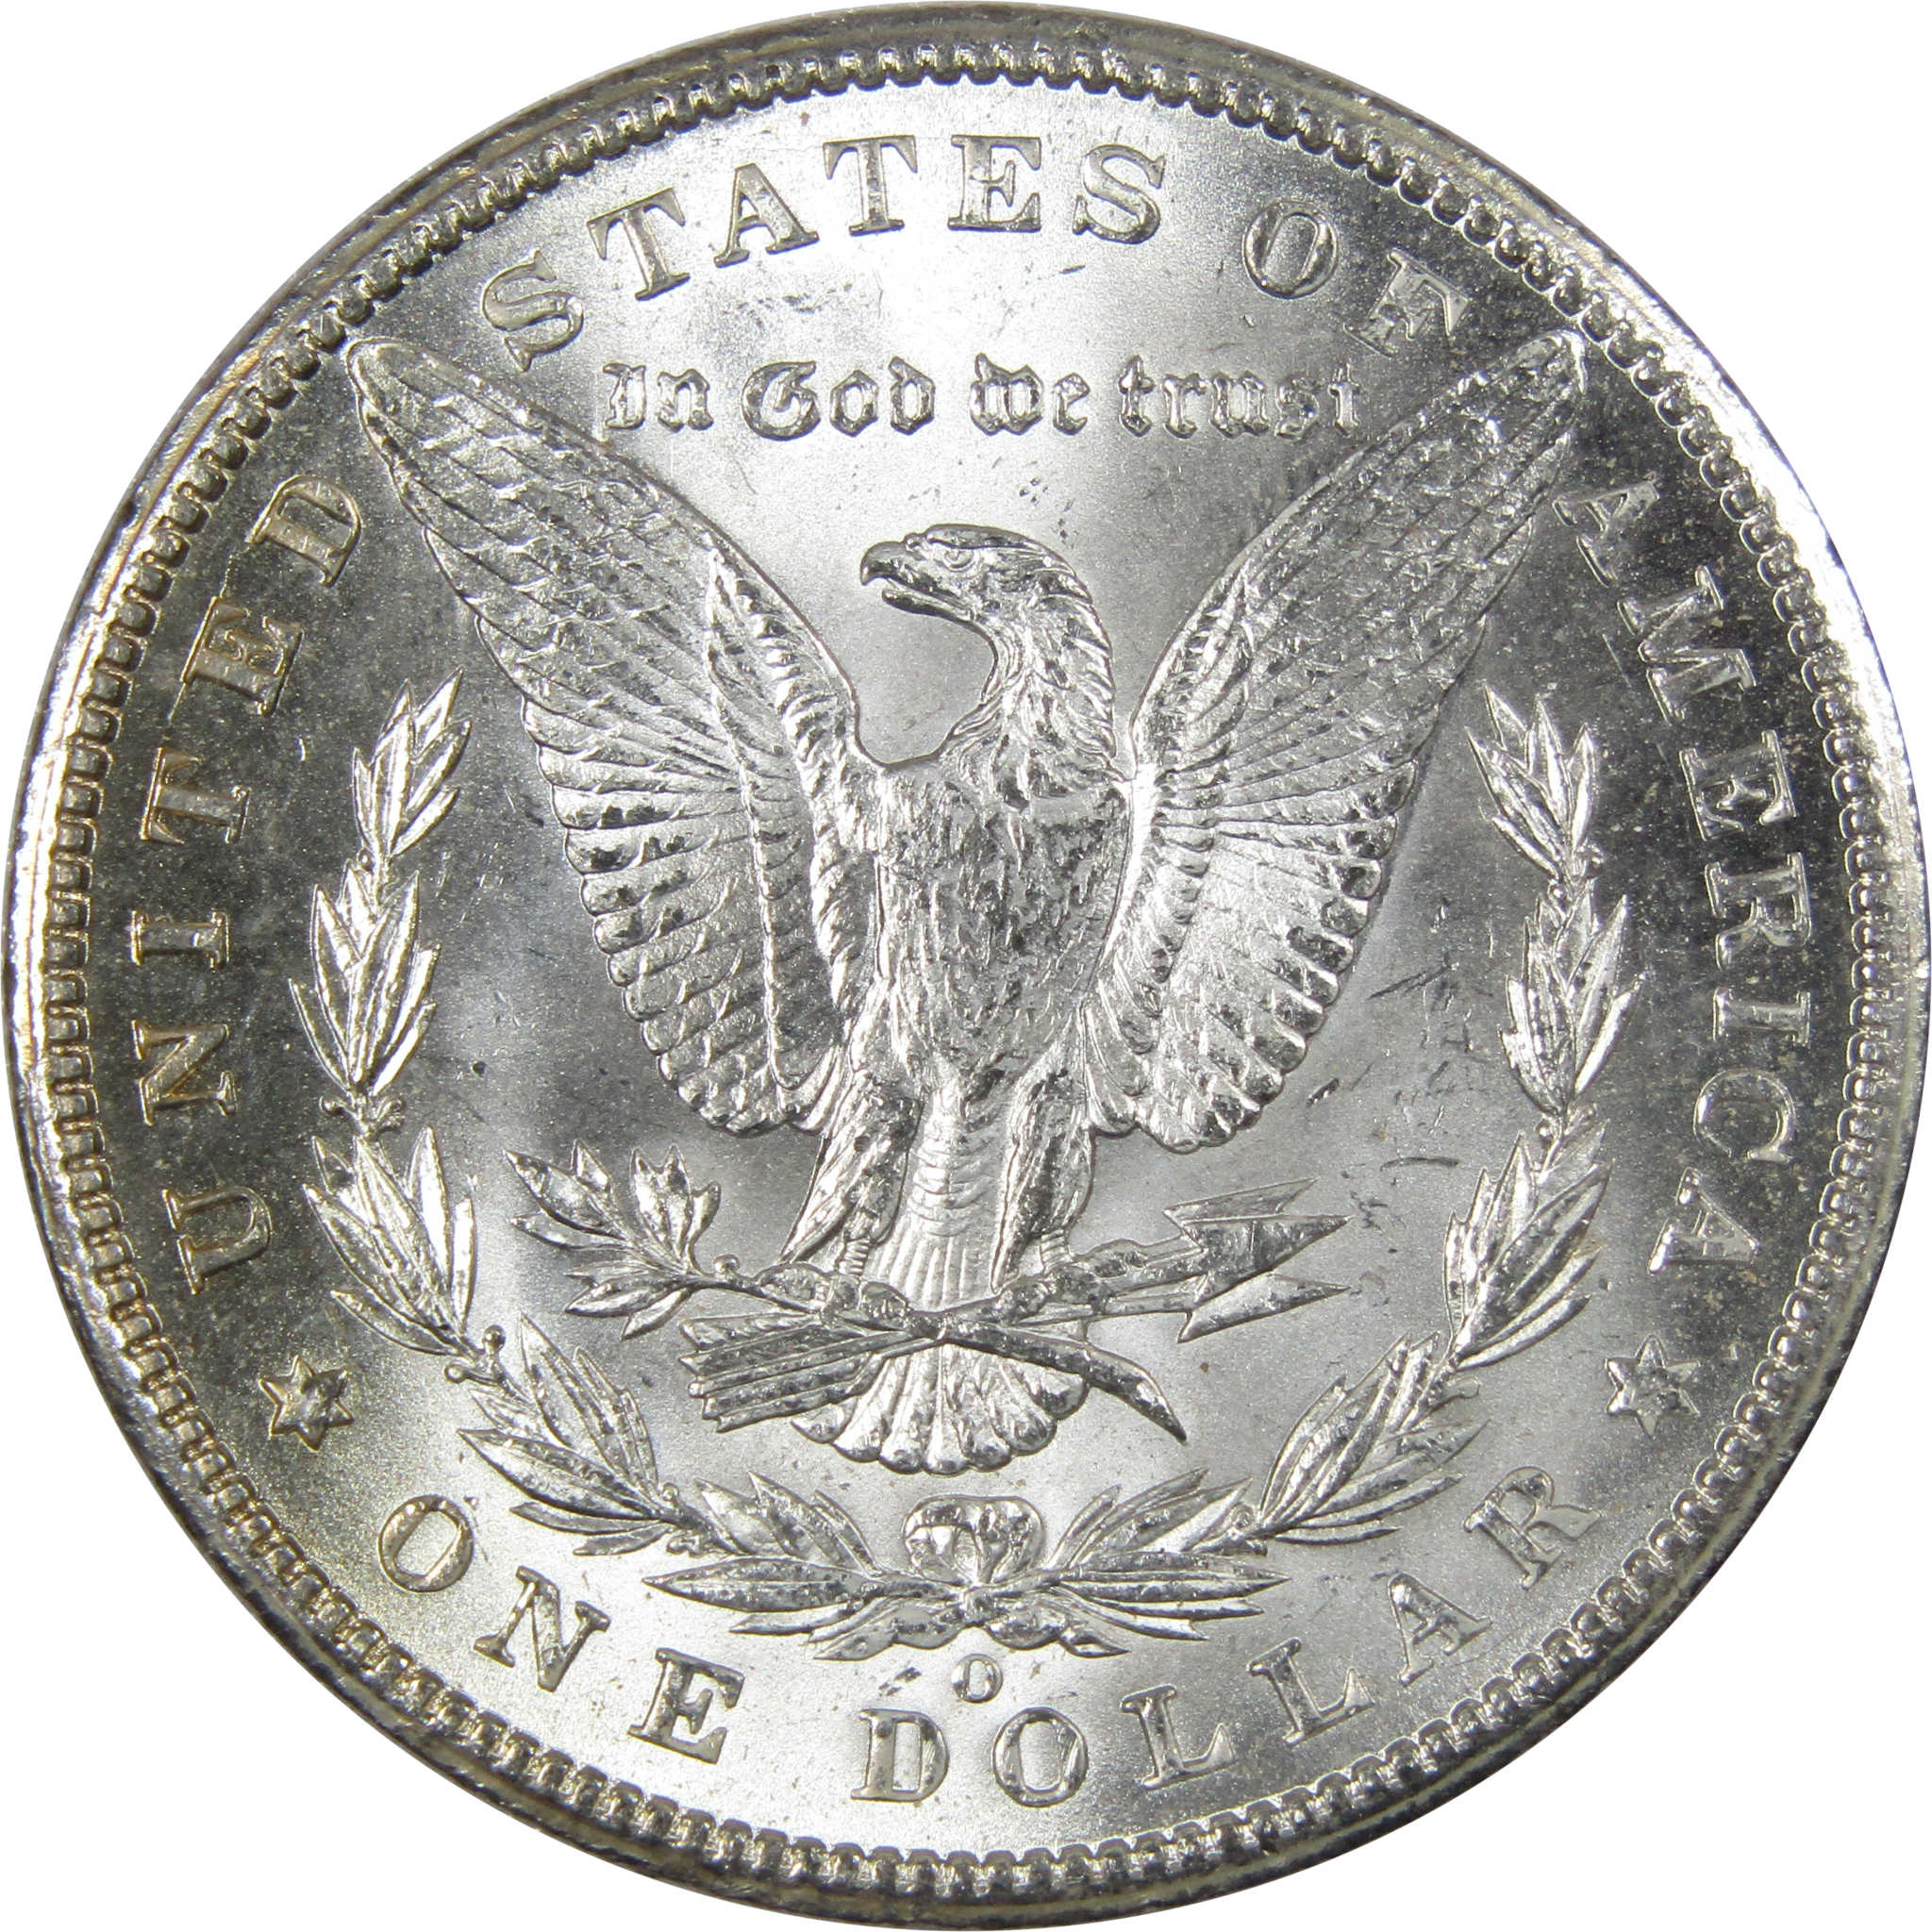 1900 O Morgan Dollar BU Uncirculated Mint State 90% Silver SKU:IPC9741 - Morgan coin - Morgan silver dollar - Morgan silver dollar for sale - Profile Coins &amp; Collectibles